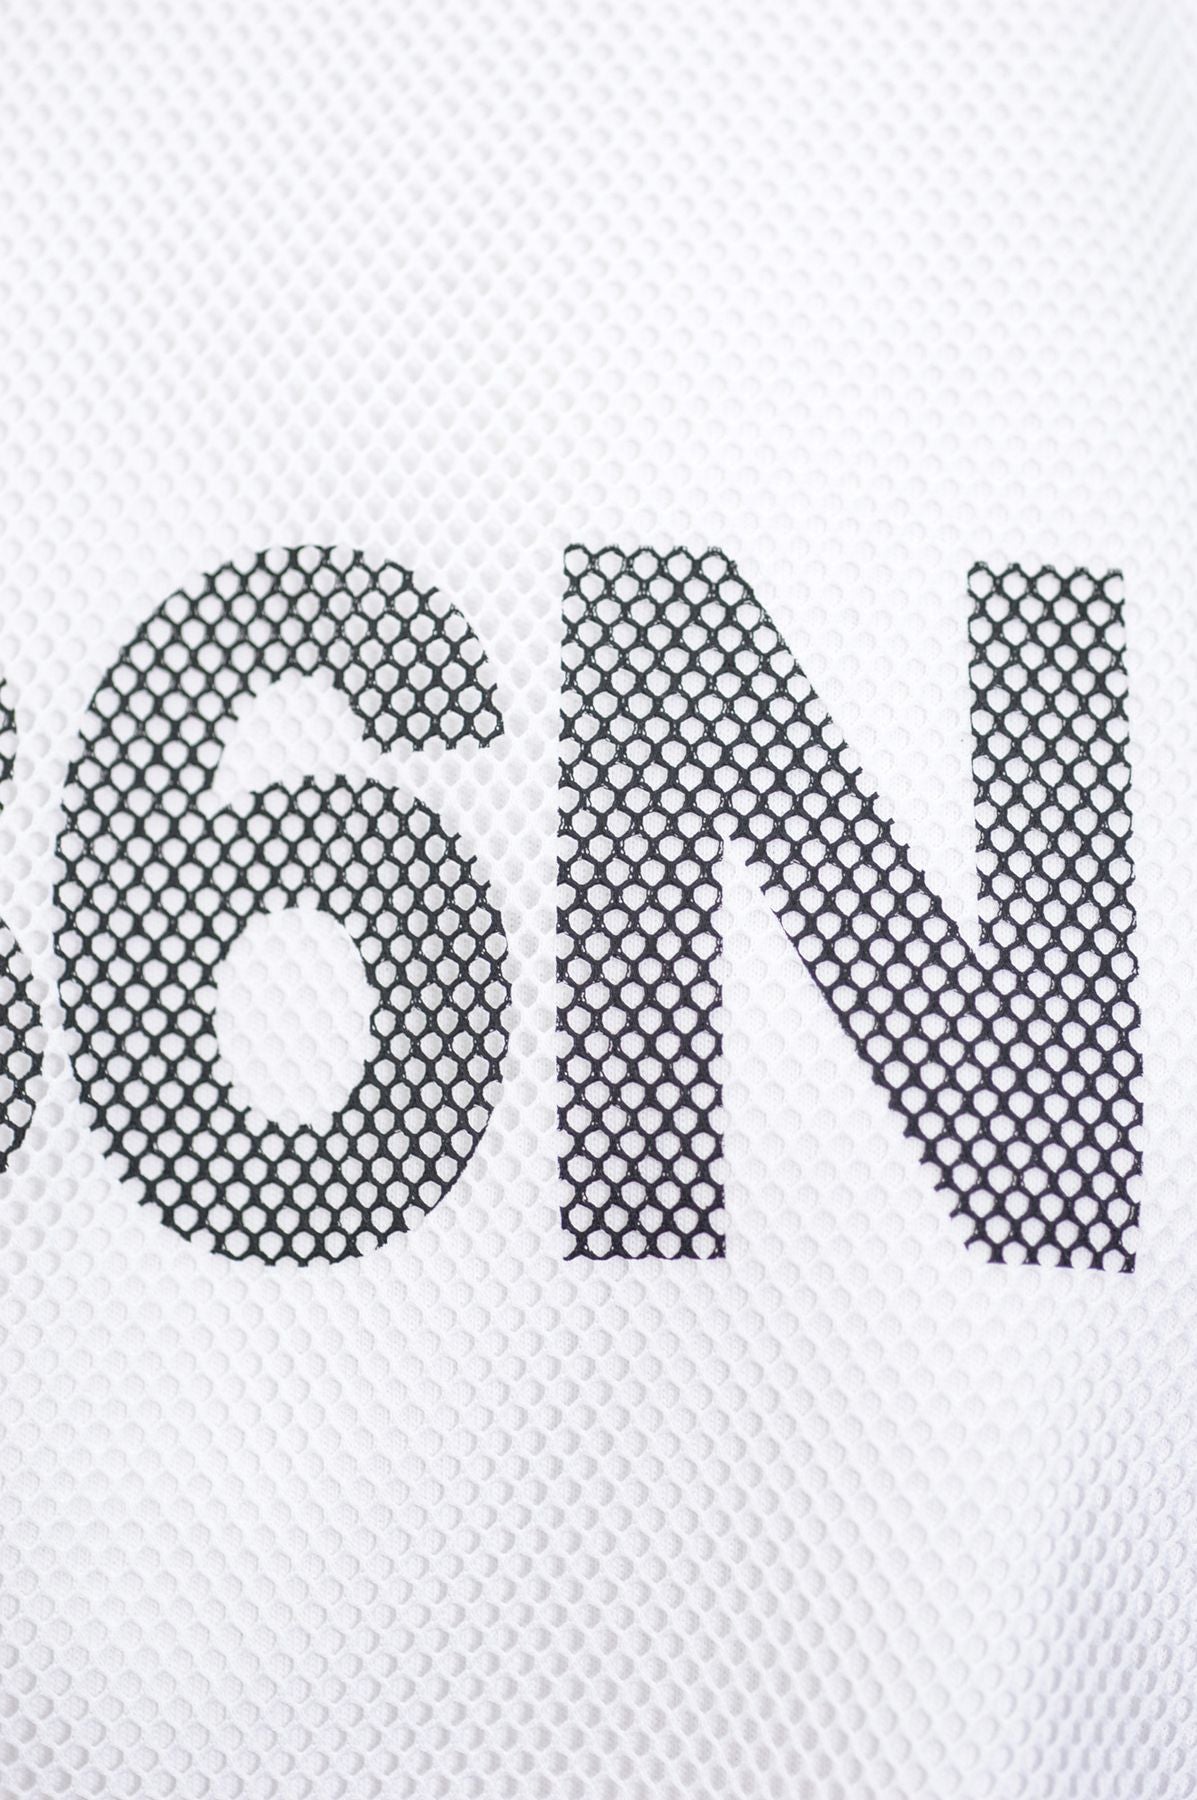 HOGAN T-shirt Primavera/Estate Cotone